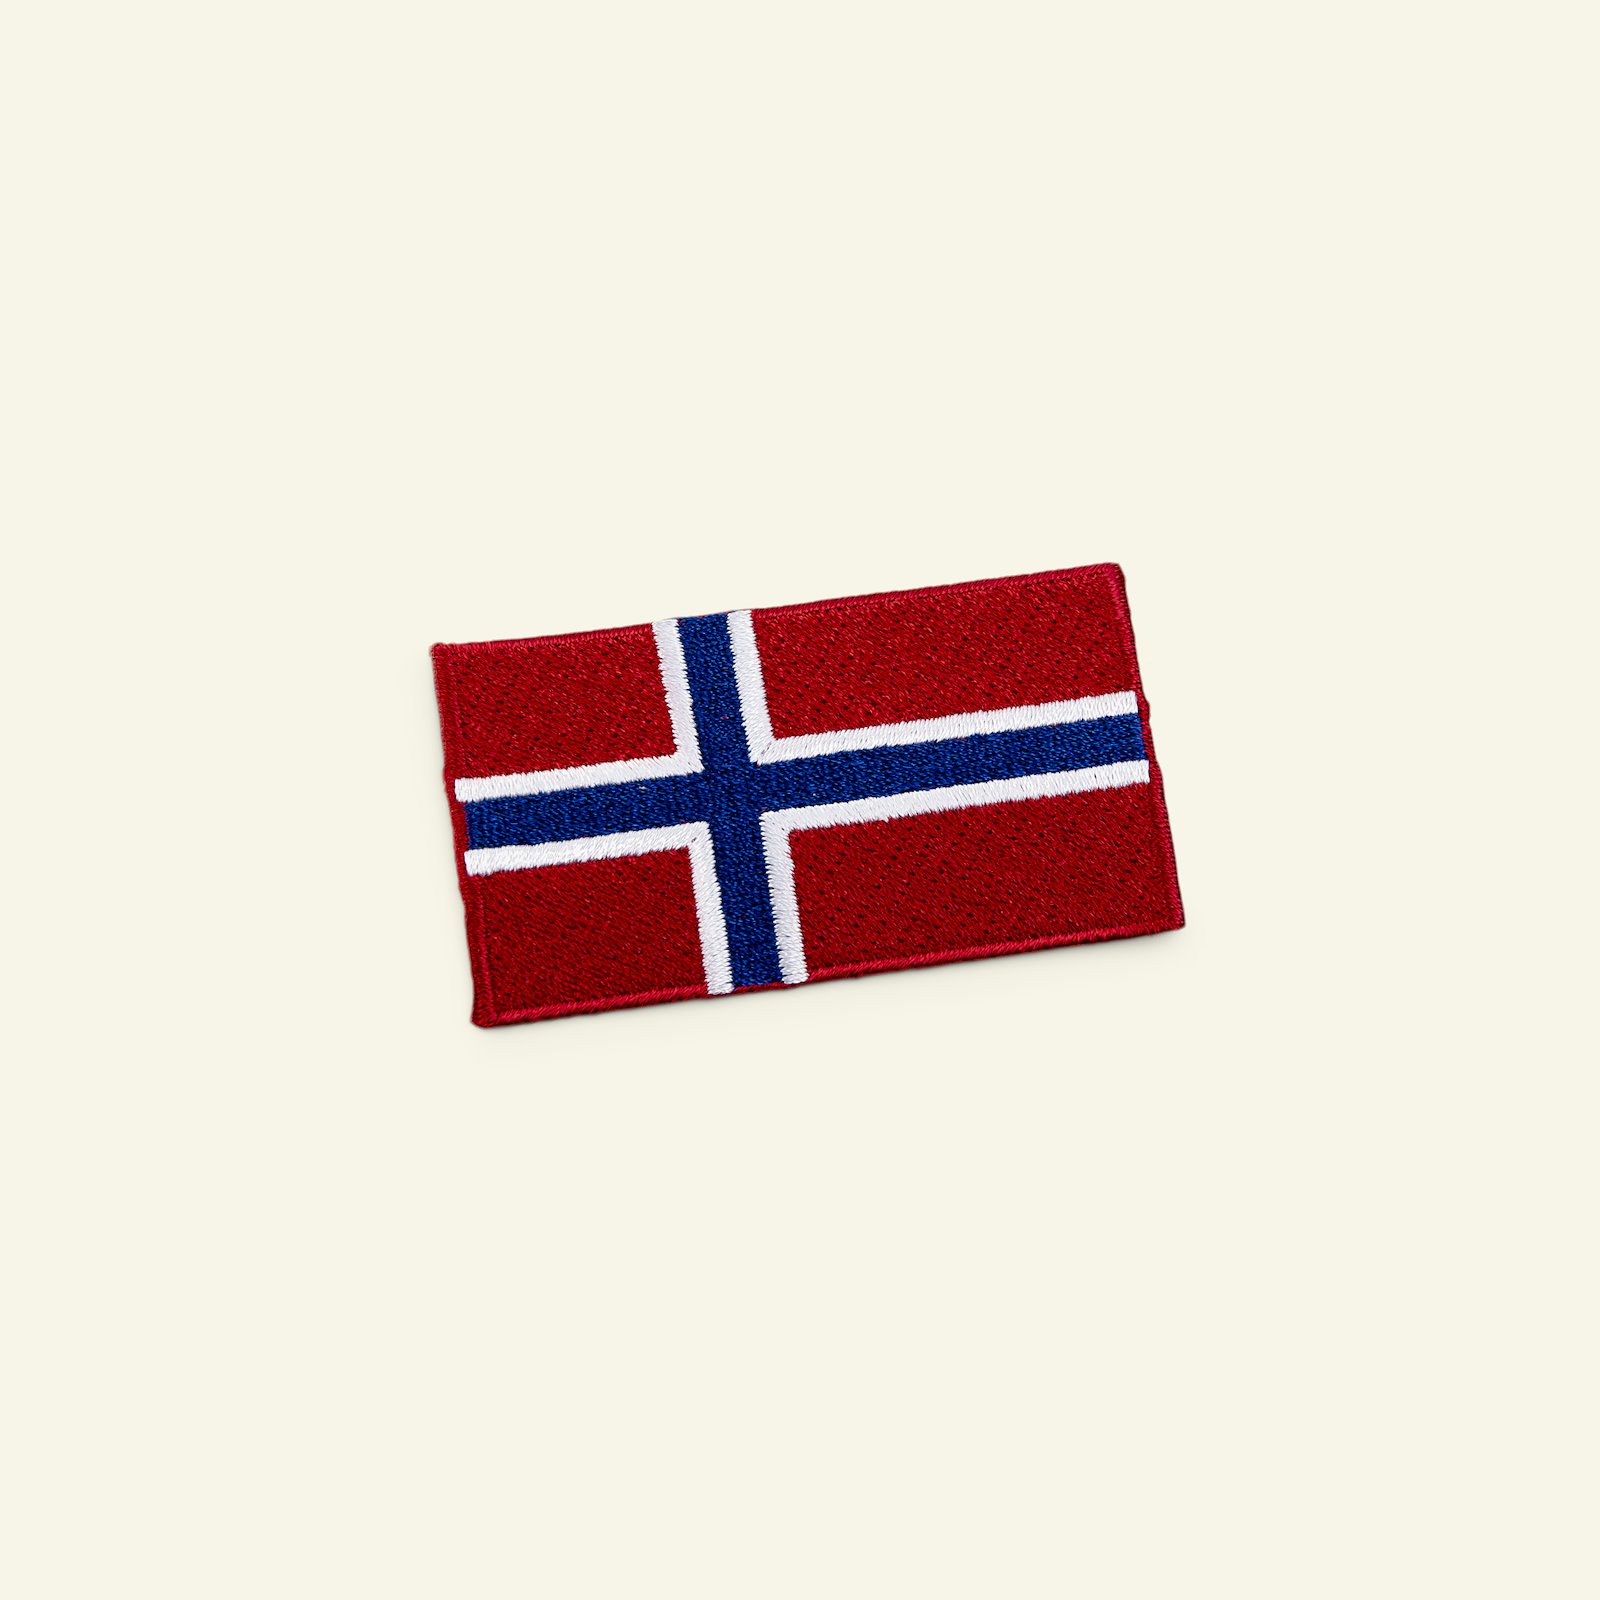 Symerke norsk flagg 68x38 mm 23718_pack